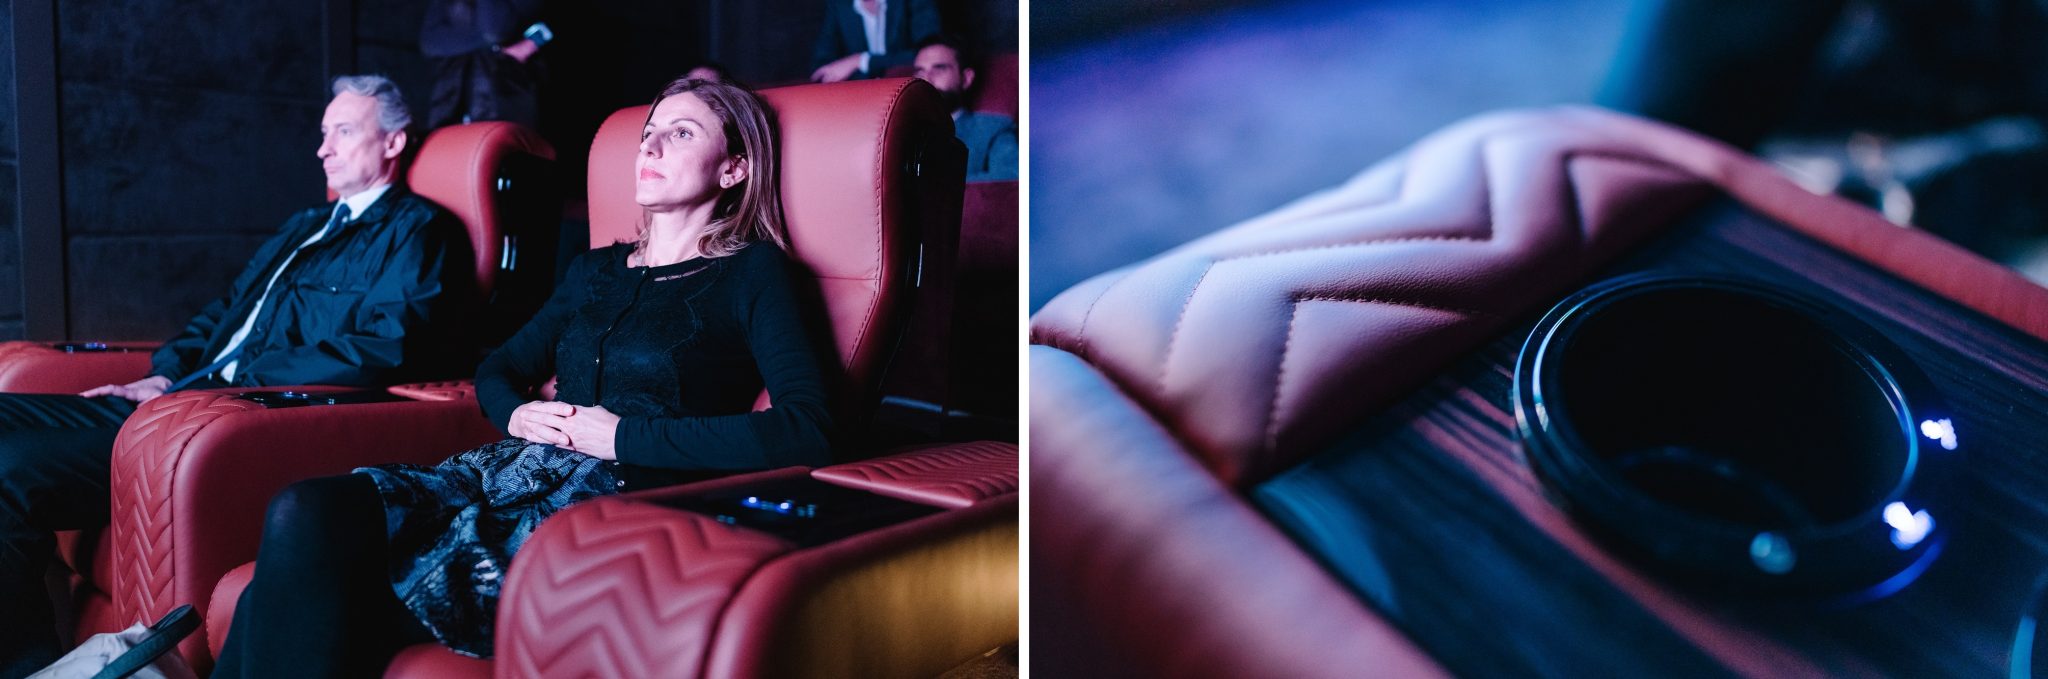 Luxury reclining cinema seat by Vismara Design